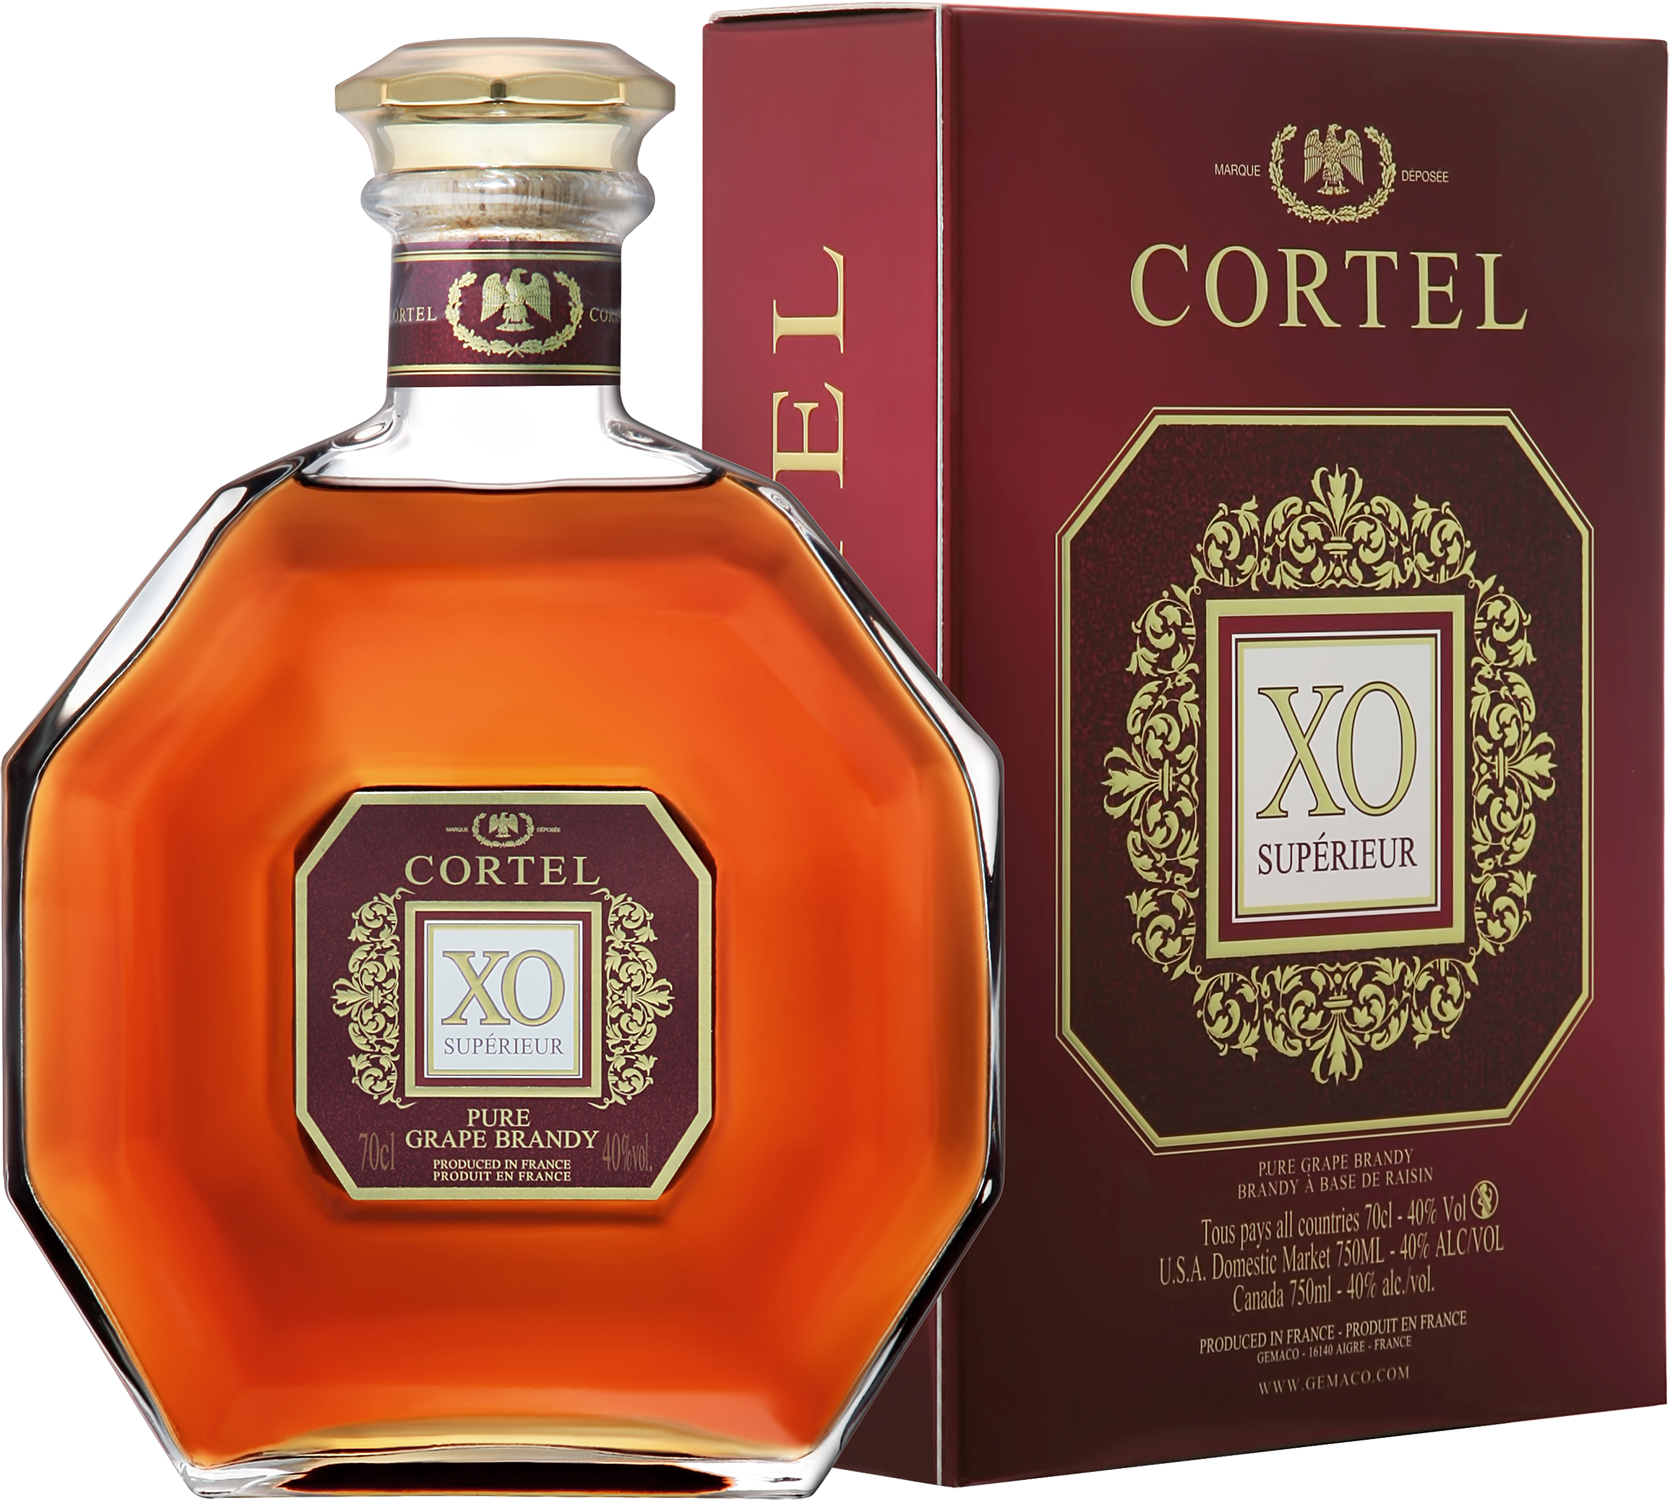 Cortel XO Superior Brandy (gift box)